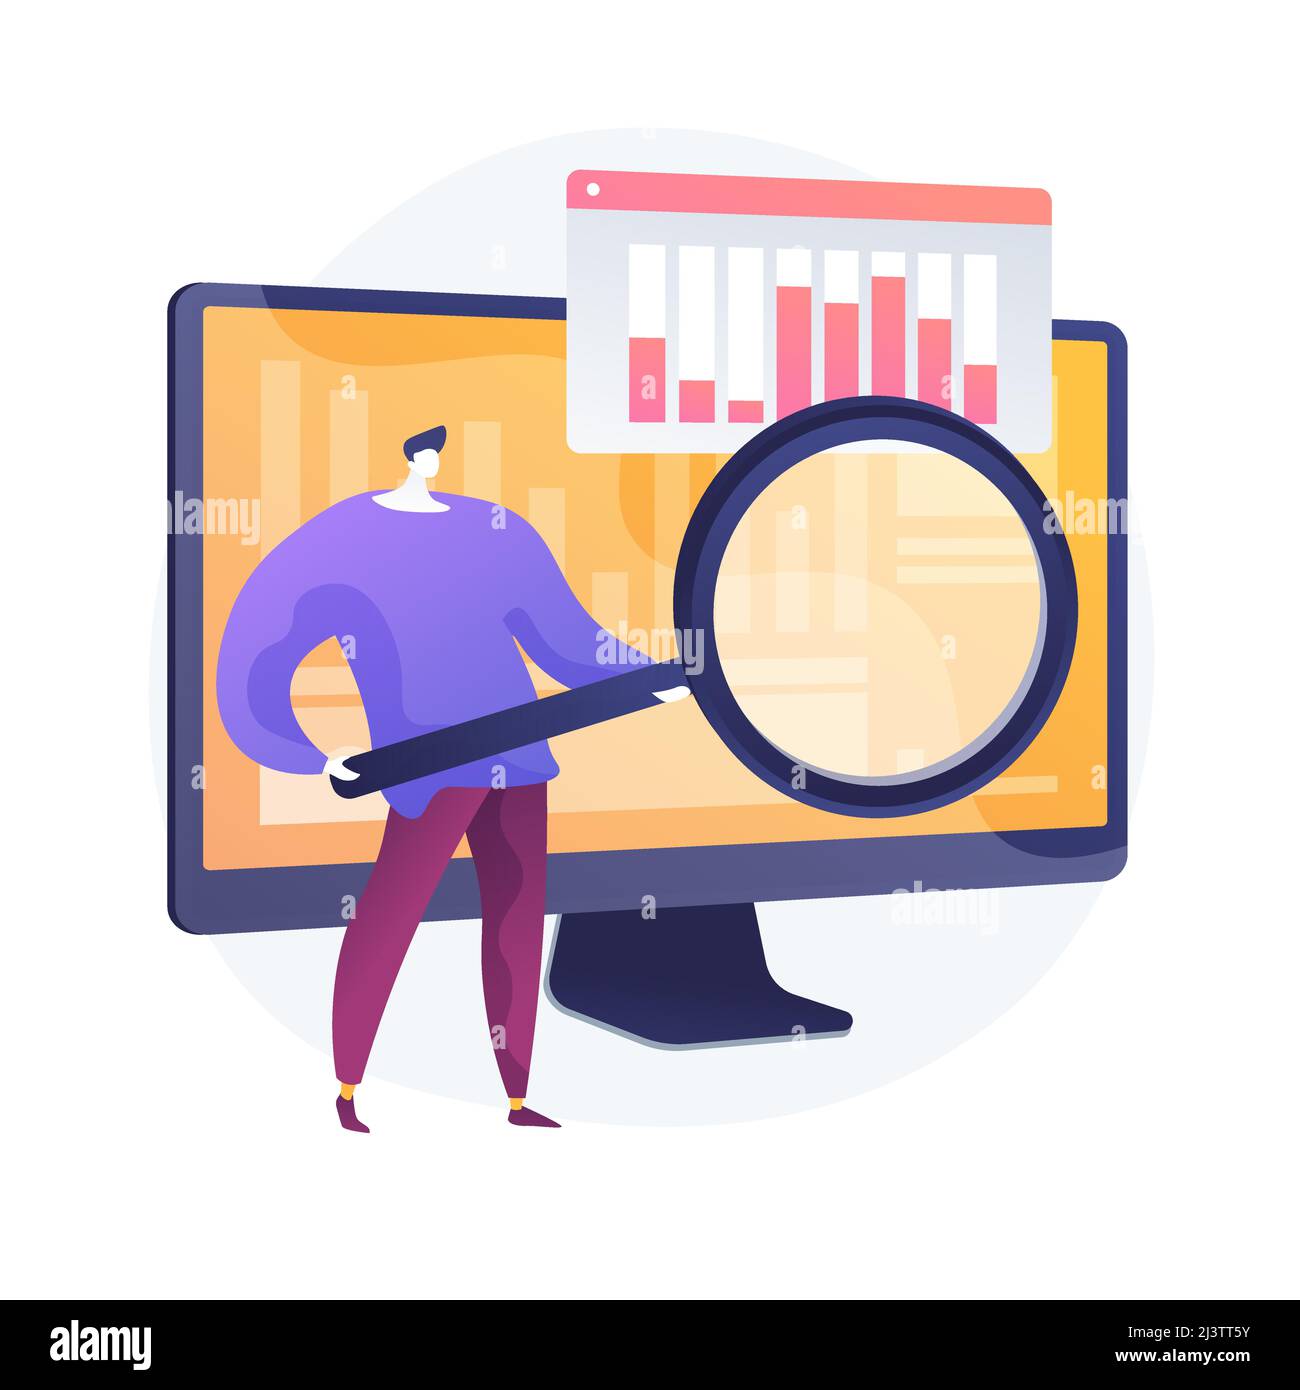 Data analytics online course. Business analysis coaching, training, mentoring. Company profit statistics and metrics monitoring. Diagram analyzing. Ve Stock Vector